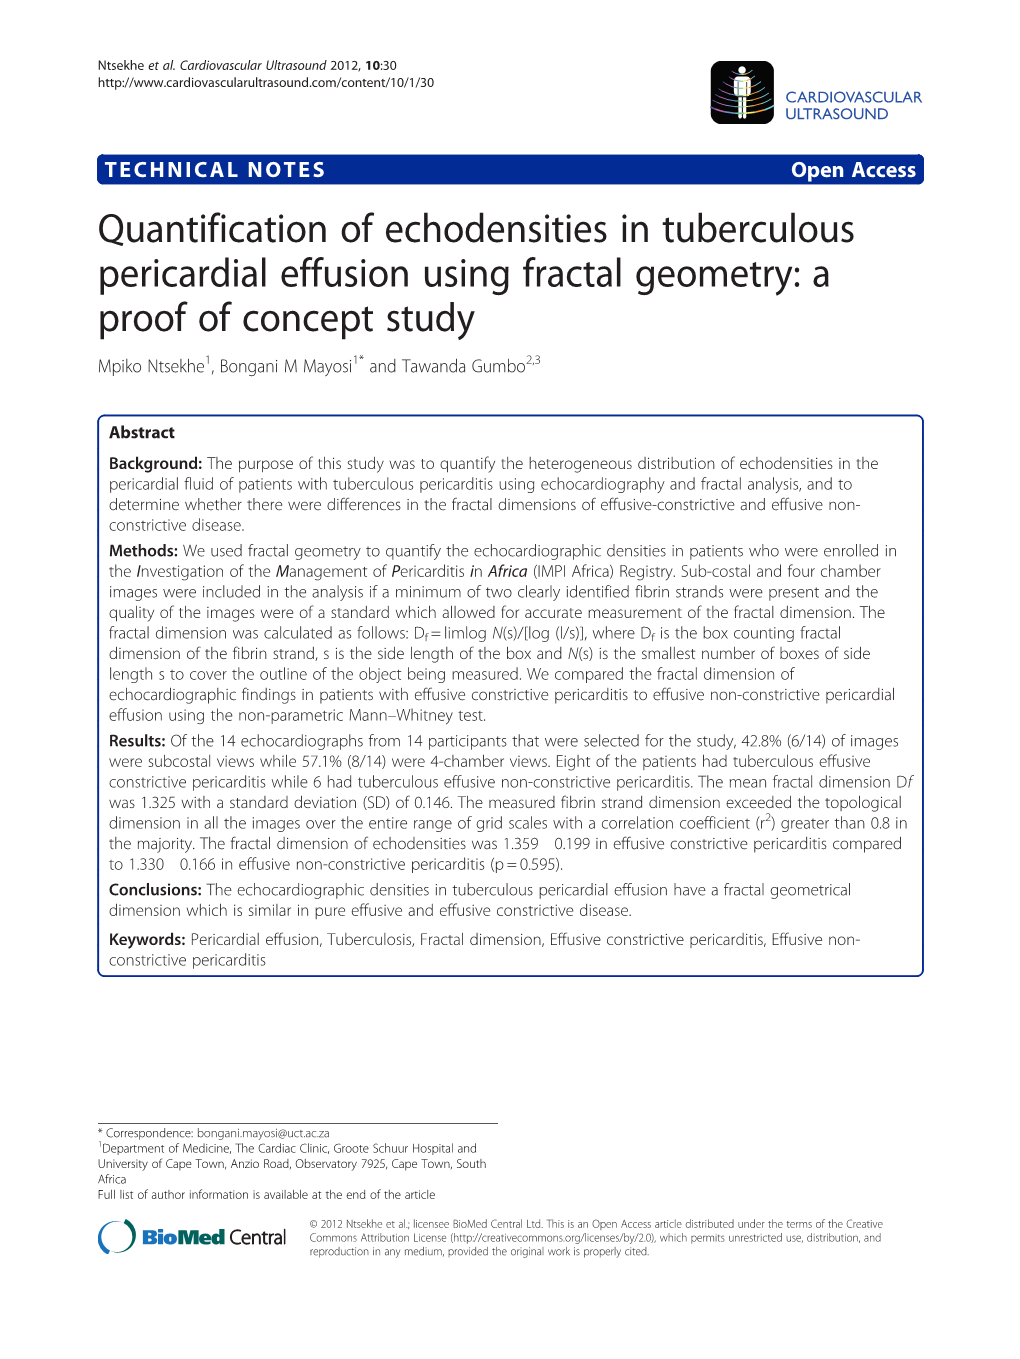 Quantification of Echodensities in Tuberculous Pericardial Effusion